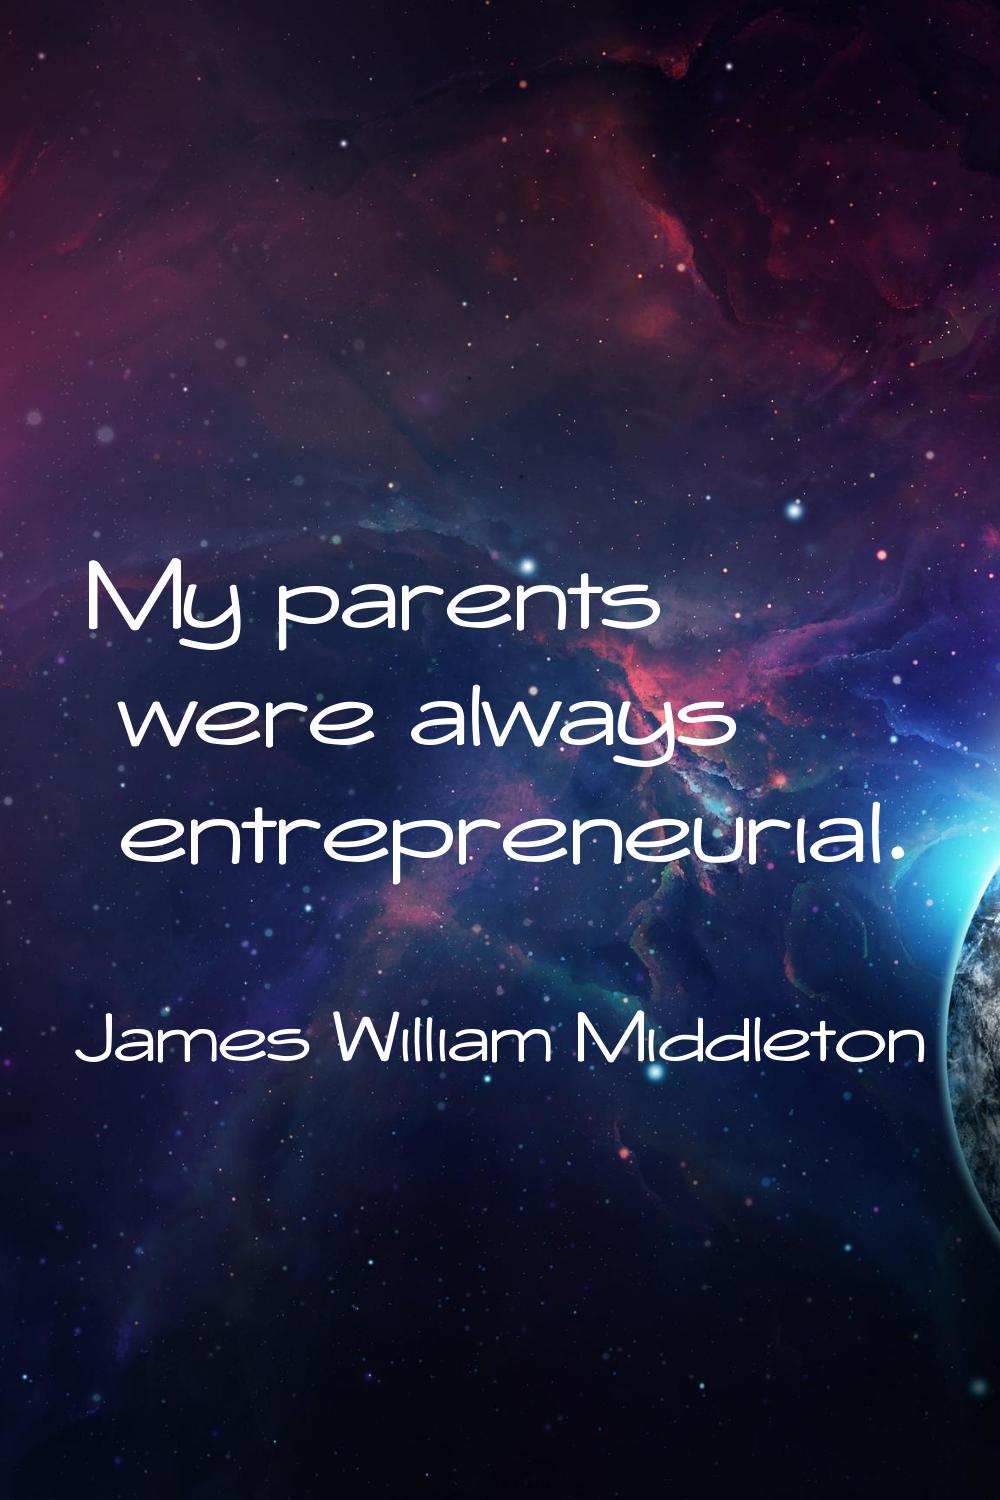 My parents were always entrepreneurial.